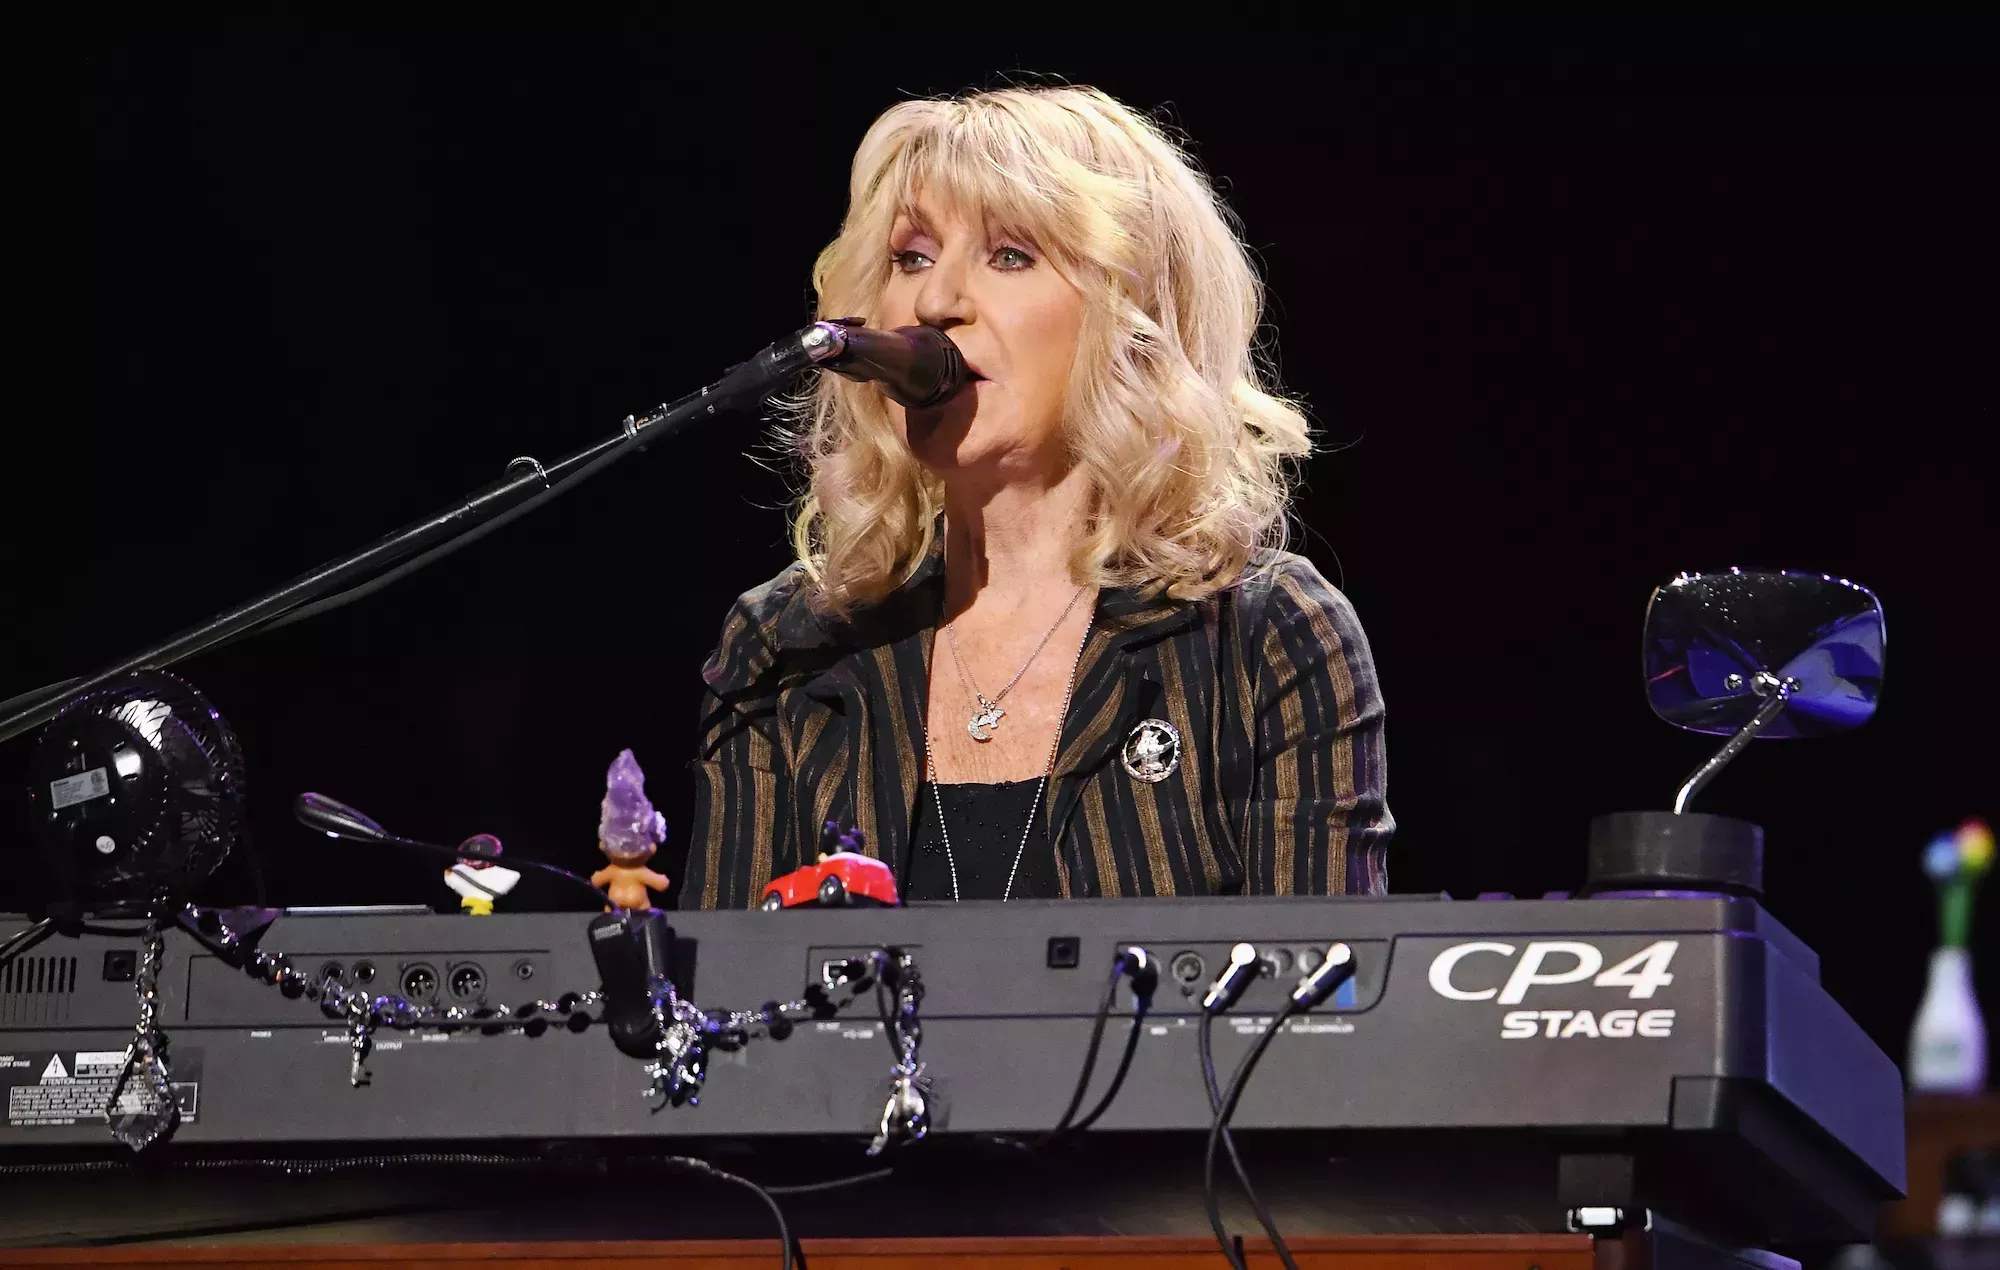 Revelada la causa de la muerte de Christine McVie de Fleetwood Mac